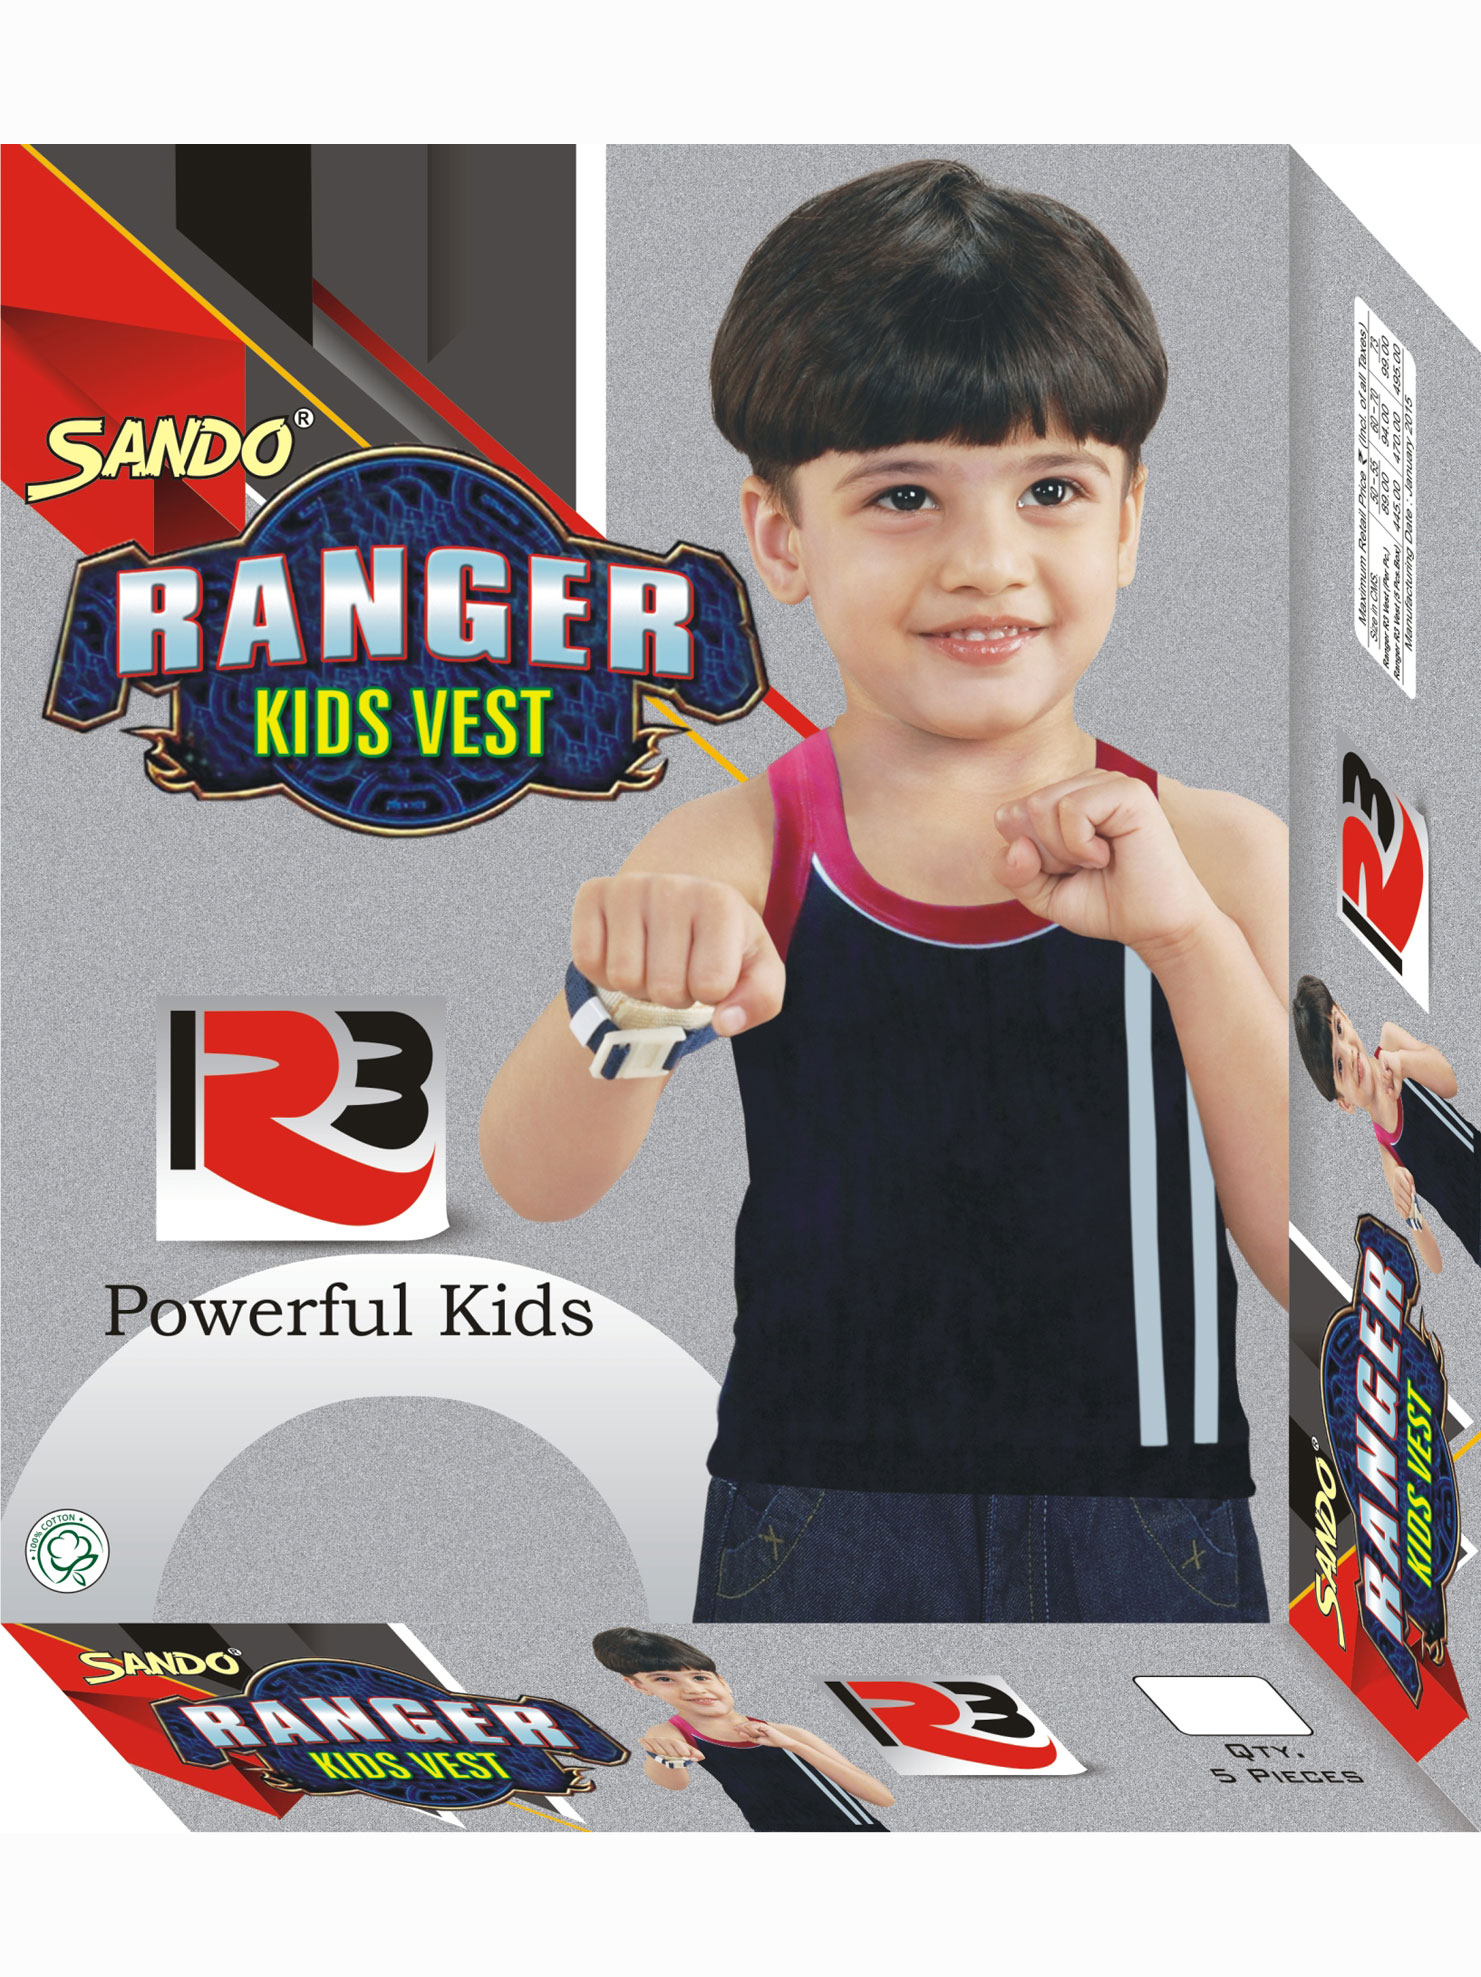 sando-ranger-r2-kids-designer-vest3-03ba325f-sando ranger r3 kids designer vest.jpg0